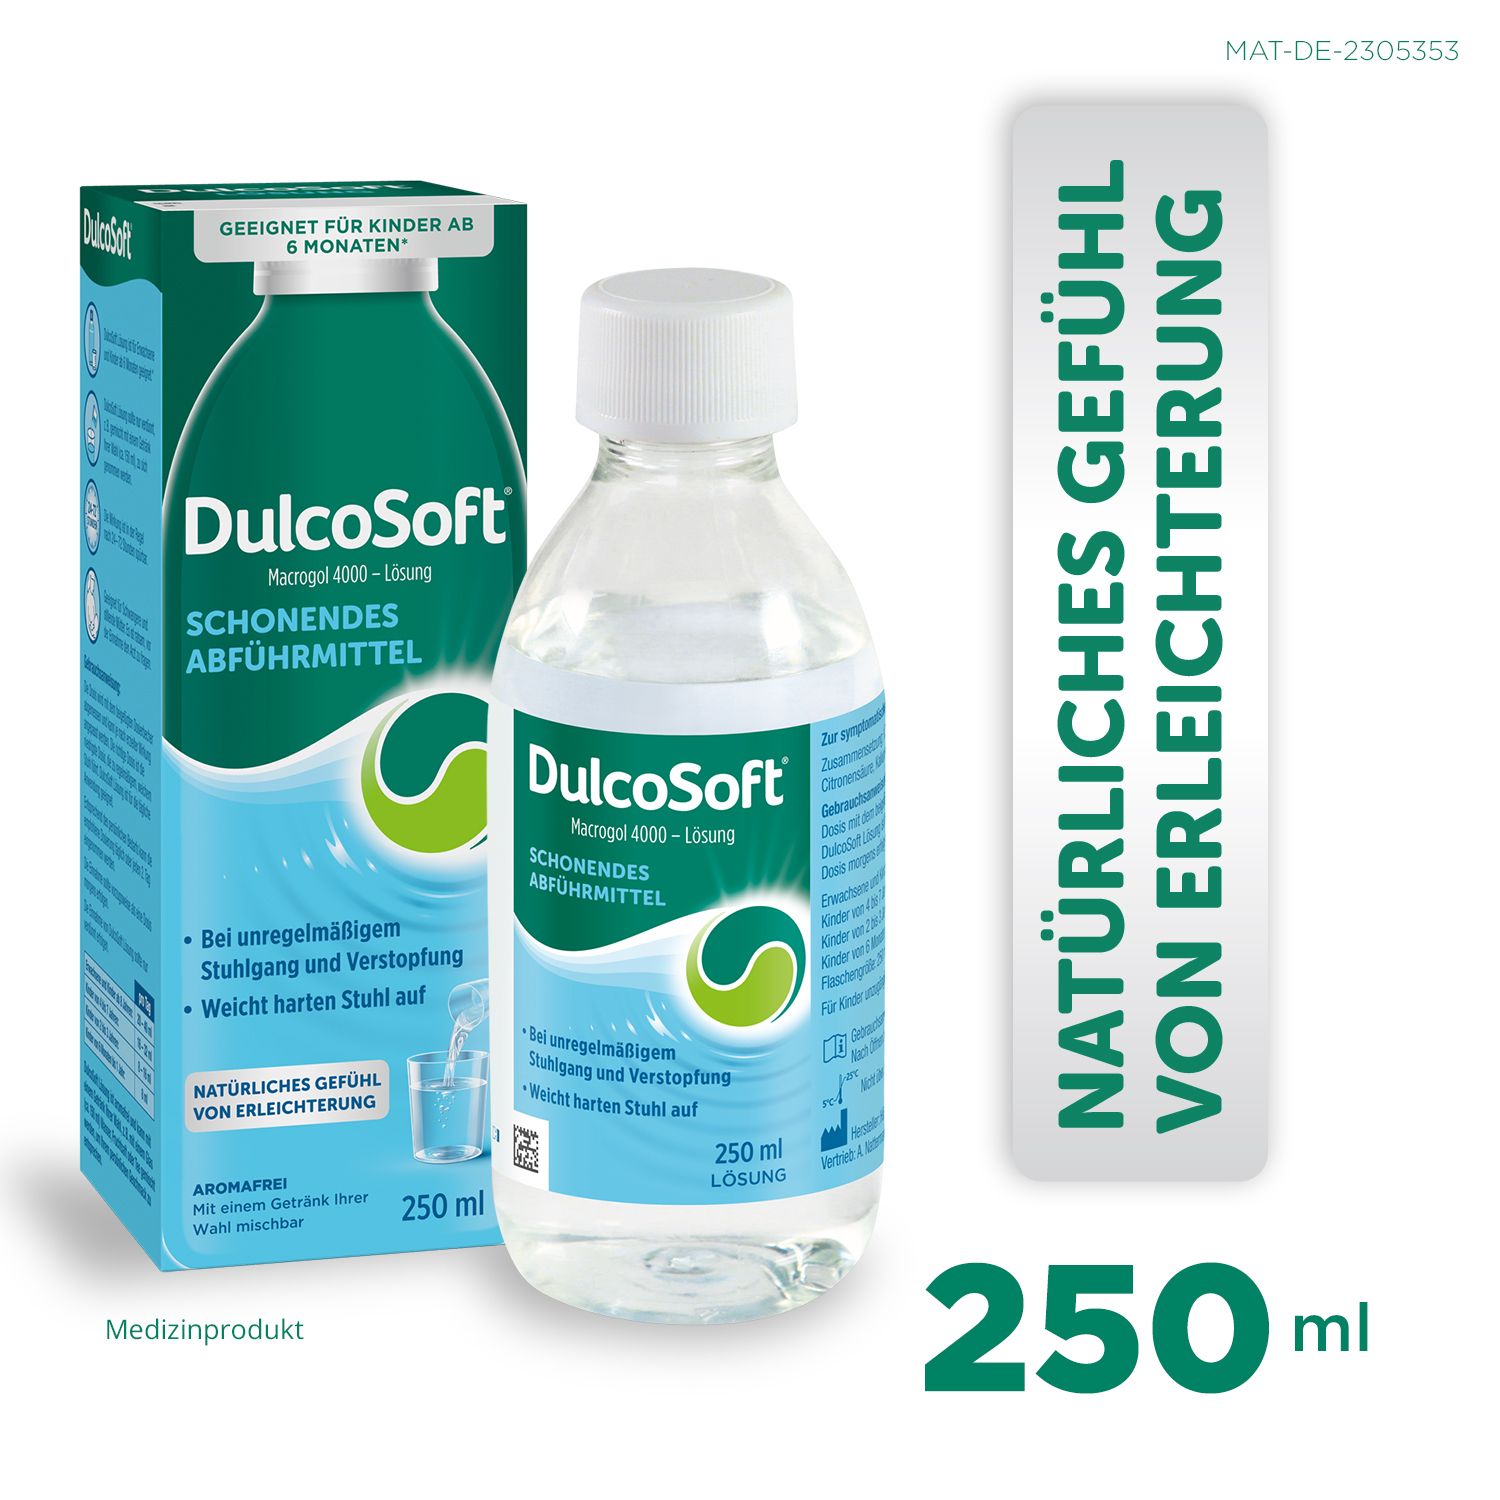 DulcoSoft® Lösung Abführmittel bei Verstopfung mit Macrogol